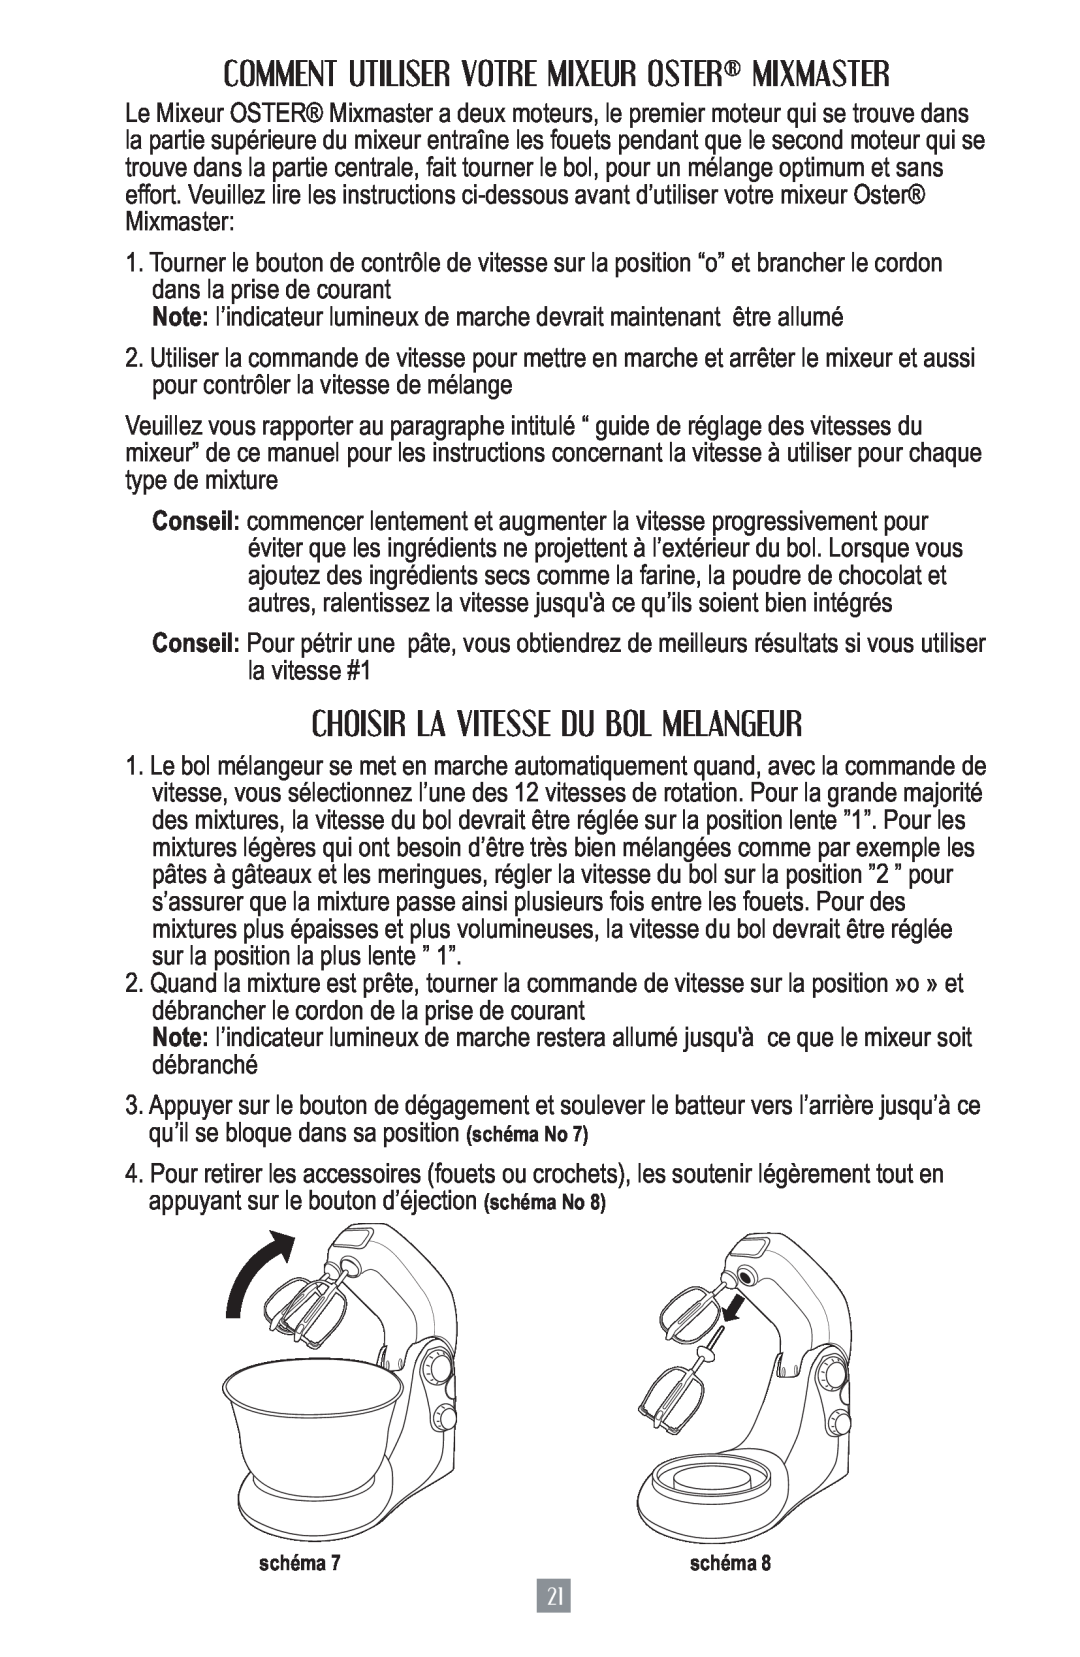 Oster 2700 instruction manual Choisir La Vitesse Du Bol Melangeur, Comment Utiliser Votre Mixeur Oster Mixmaster 